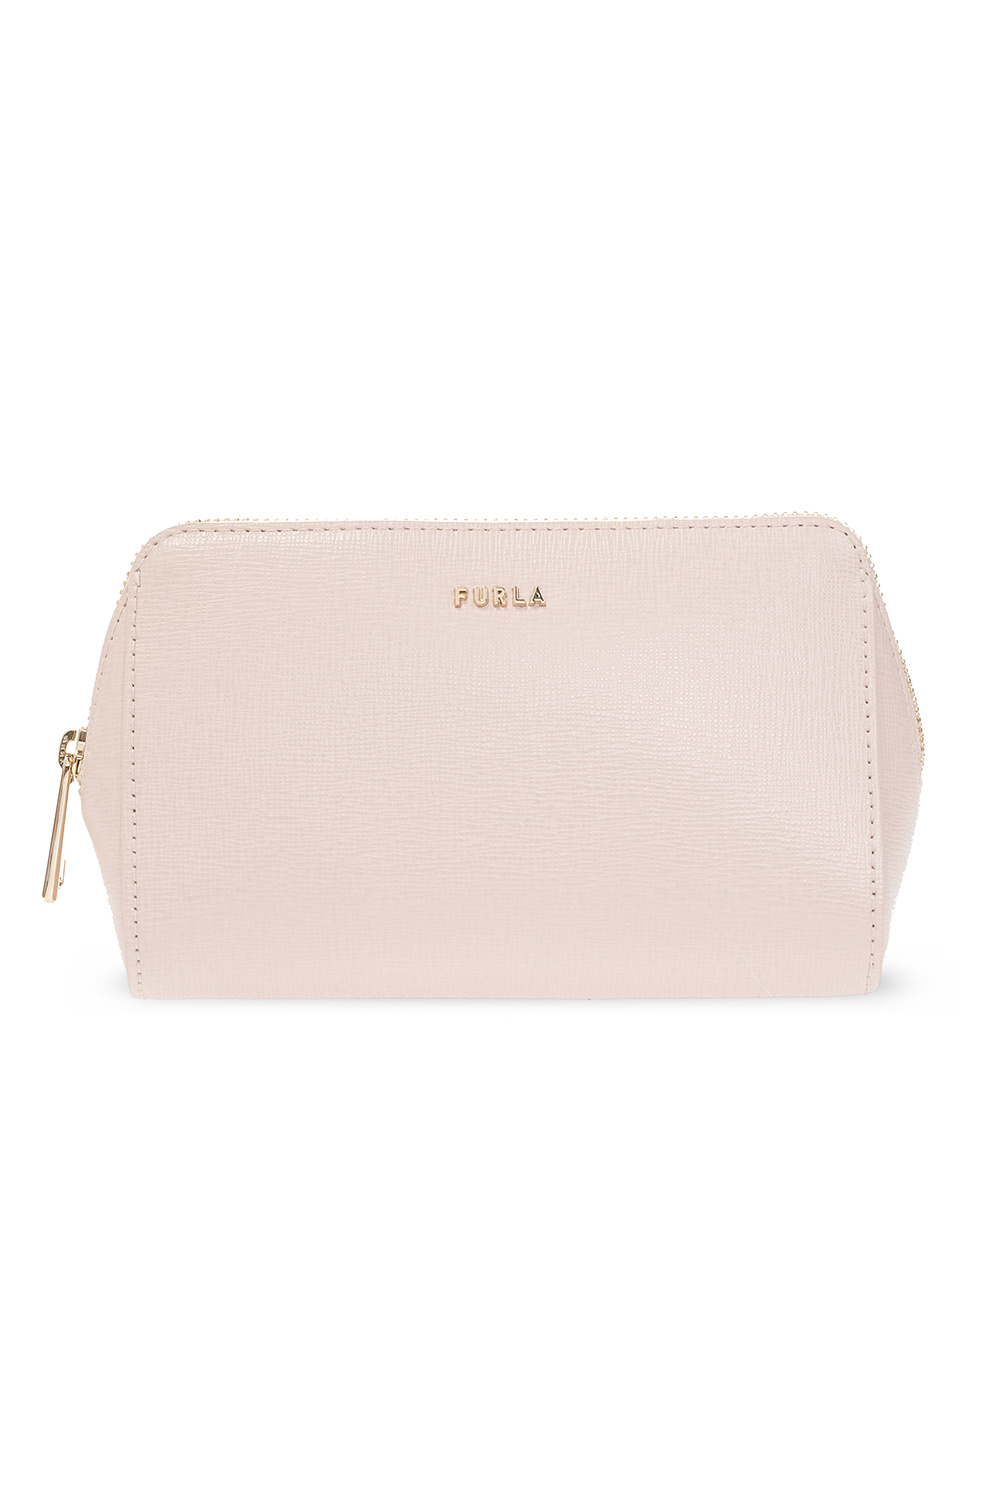 Furla ‘Electra’ leather wash bag